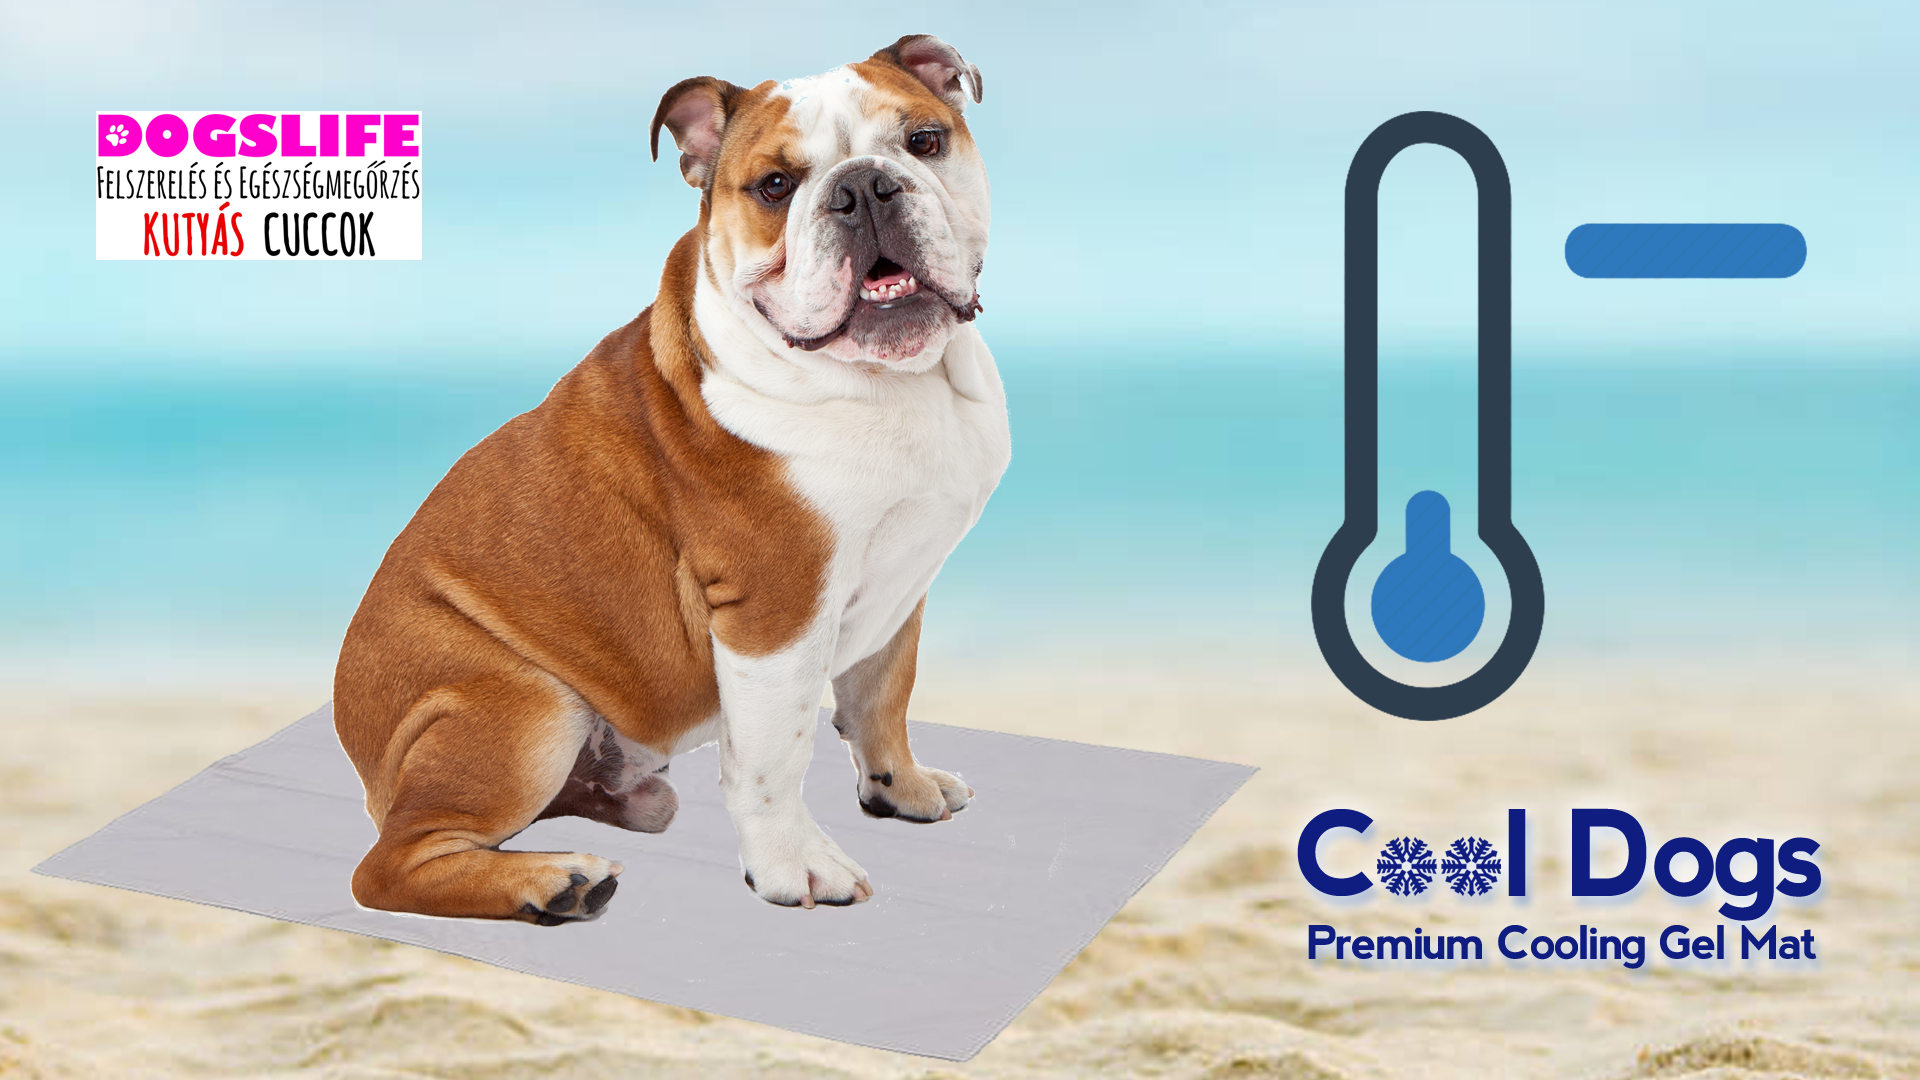 Cool Dogs Premium Cooling Gel Mat